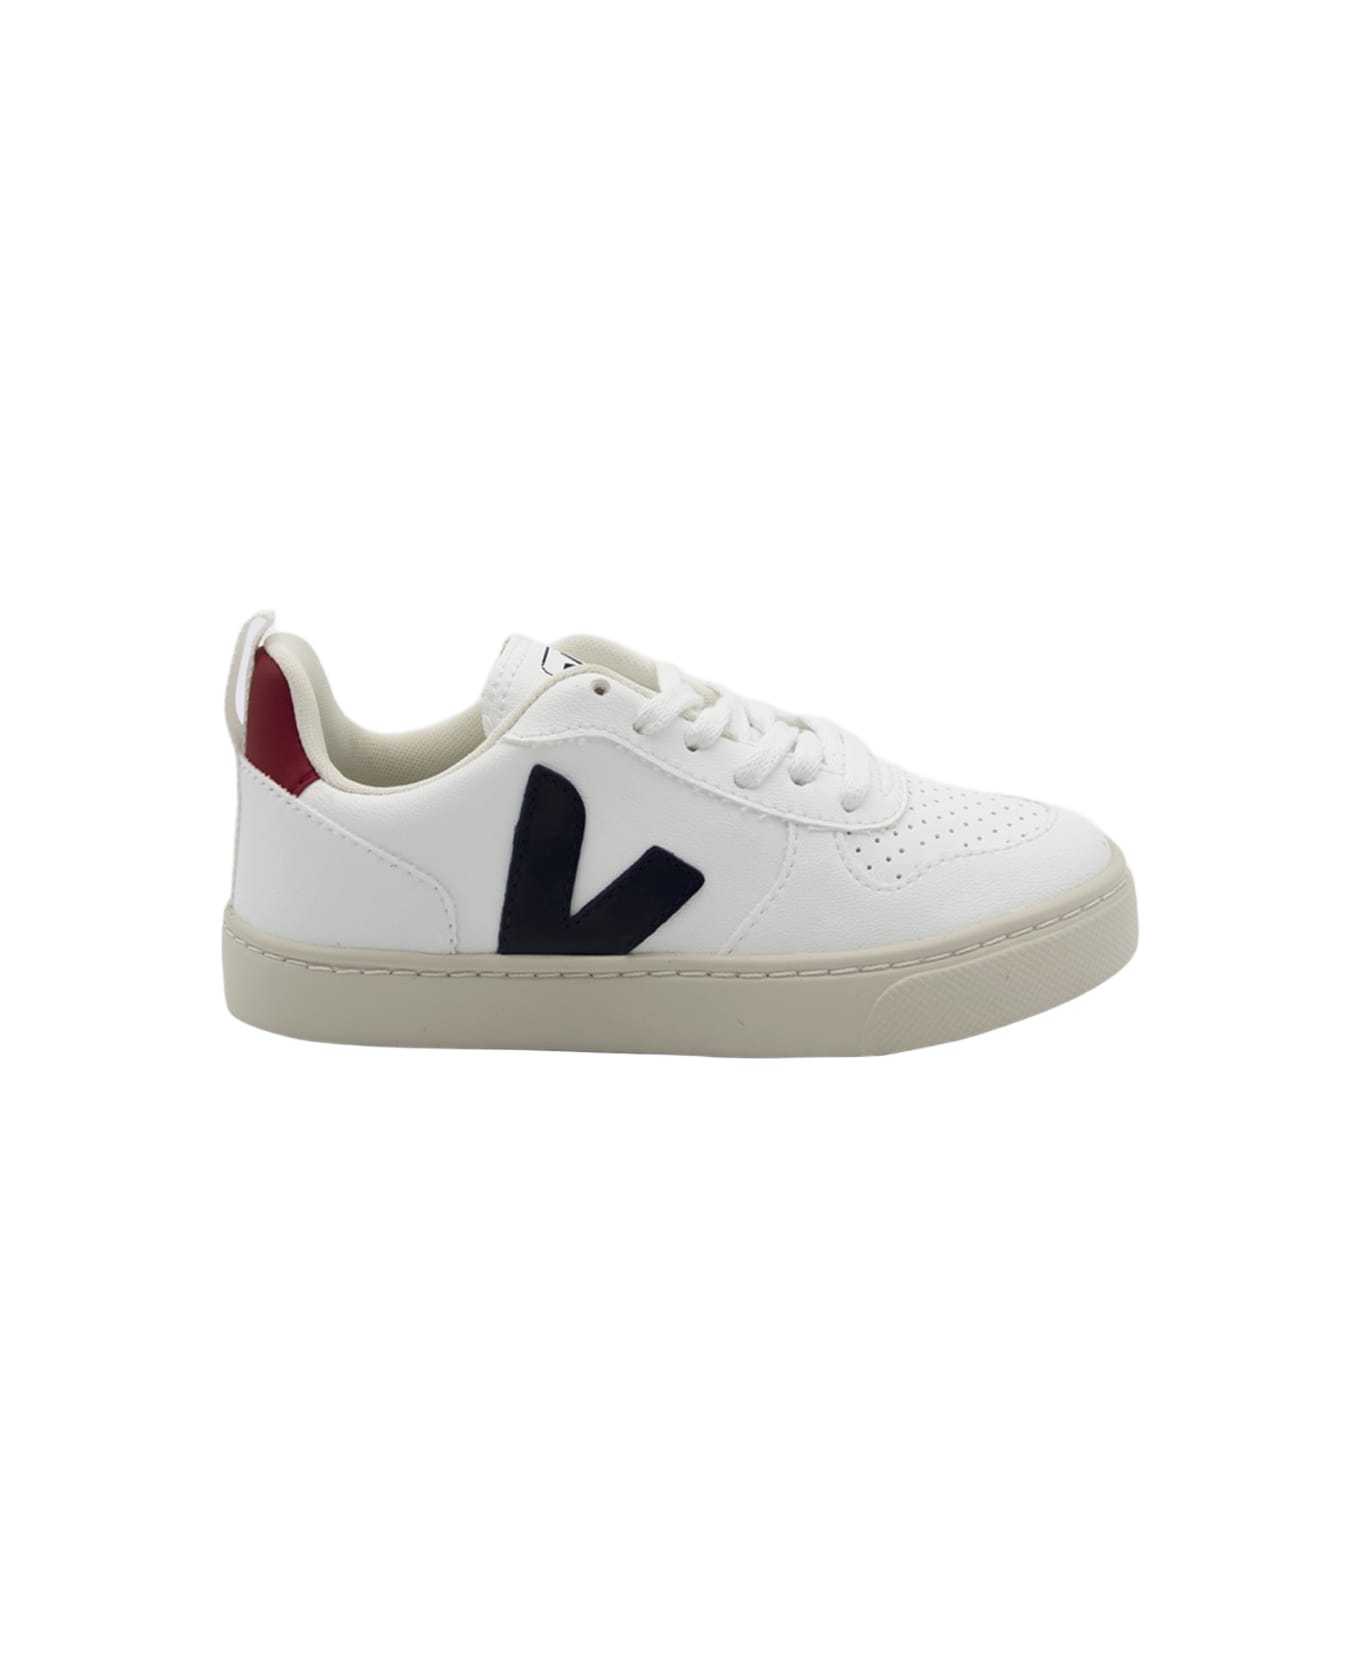 Veja White And Red Leather Esplar Sneakers - WHITE/COBALT PEKIN シューズ